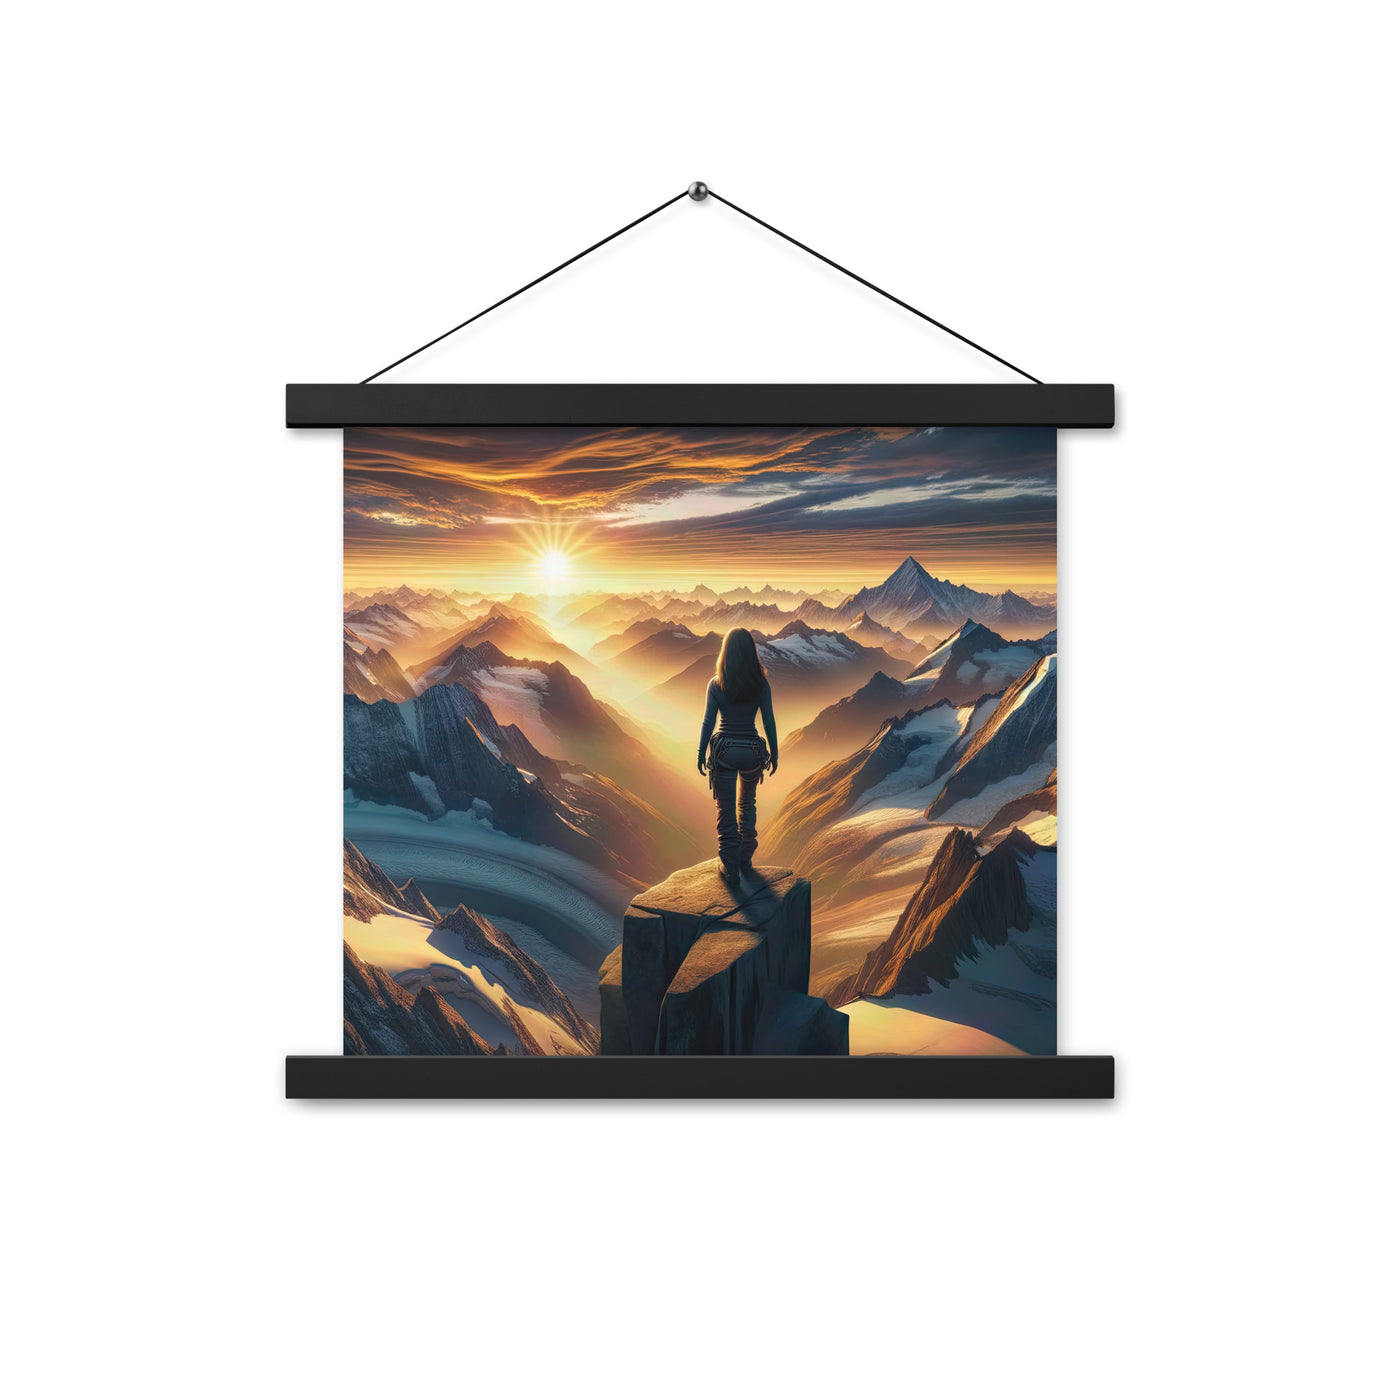 Fotorealistische Darstellung der Alpen bei Sonnenaufgang, Wanderin unter einem gold-purpurnen Himmel - Enhanced Matte Paper Poster With wandern xxx yyy zzz 35.6 x 35.6 cm